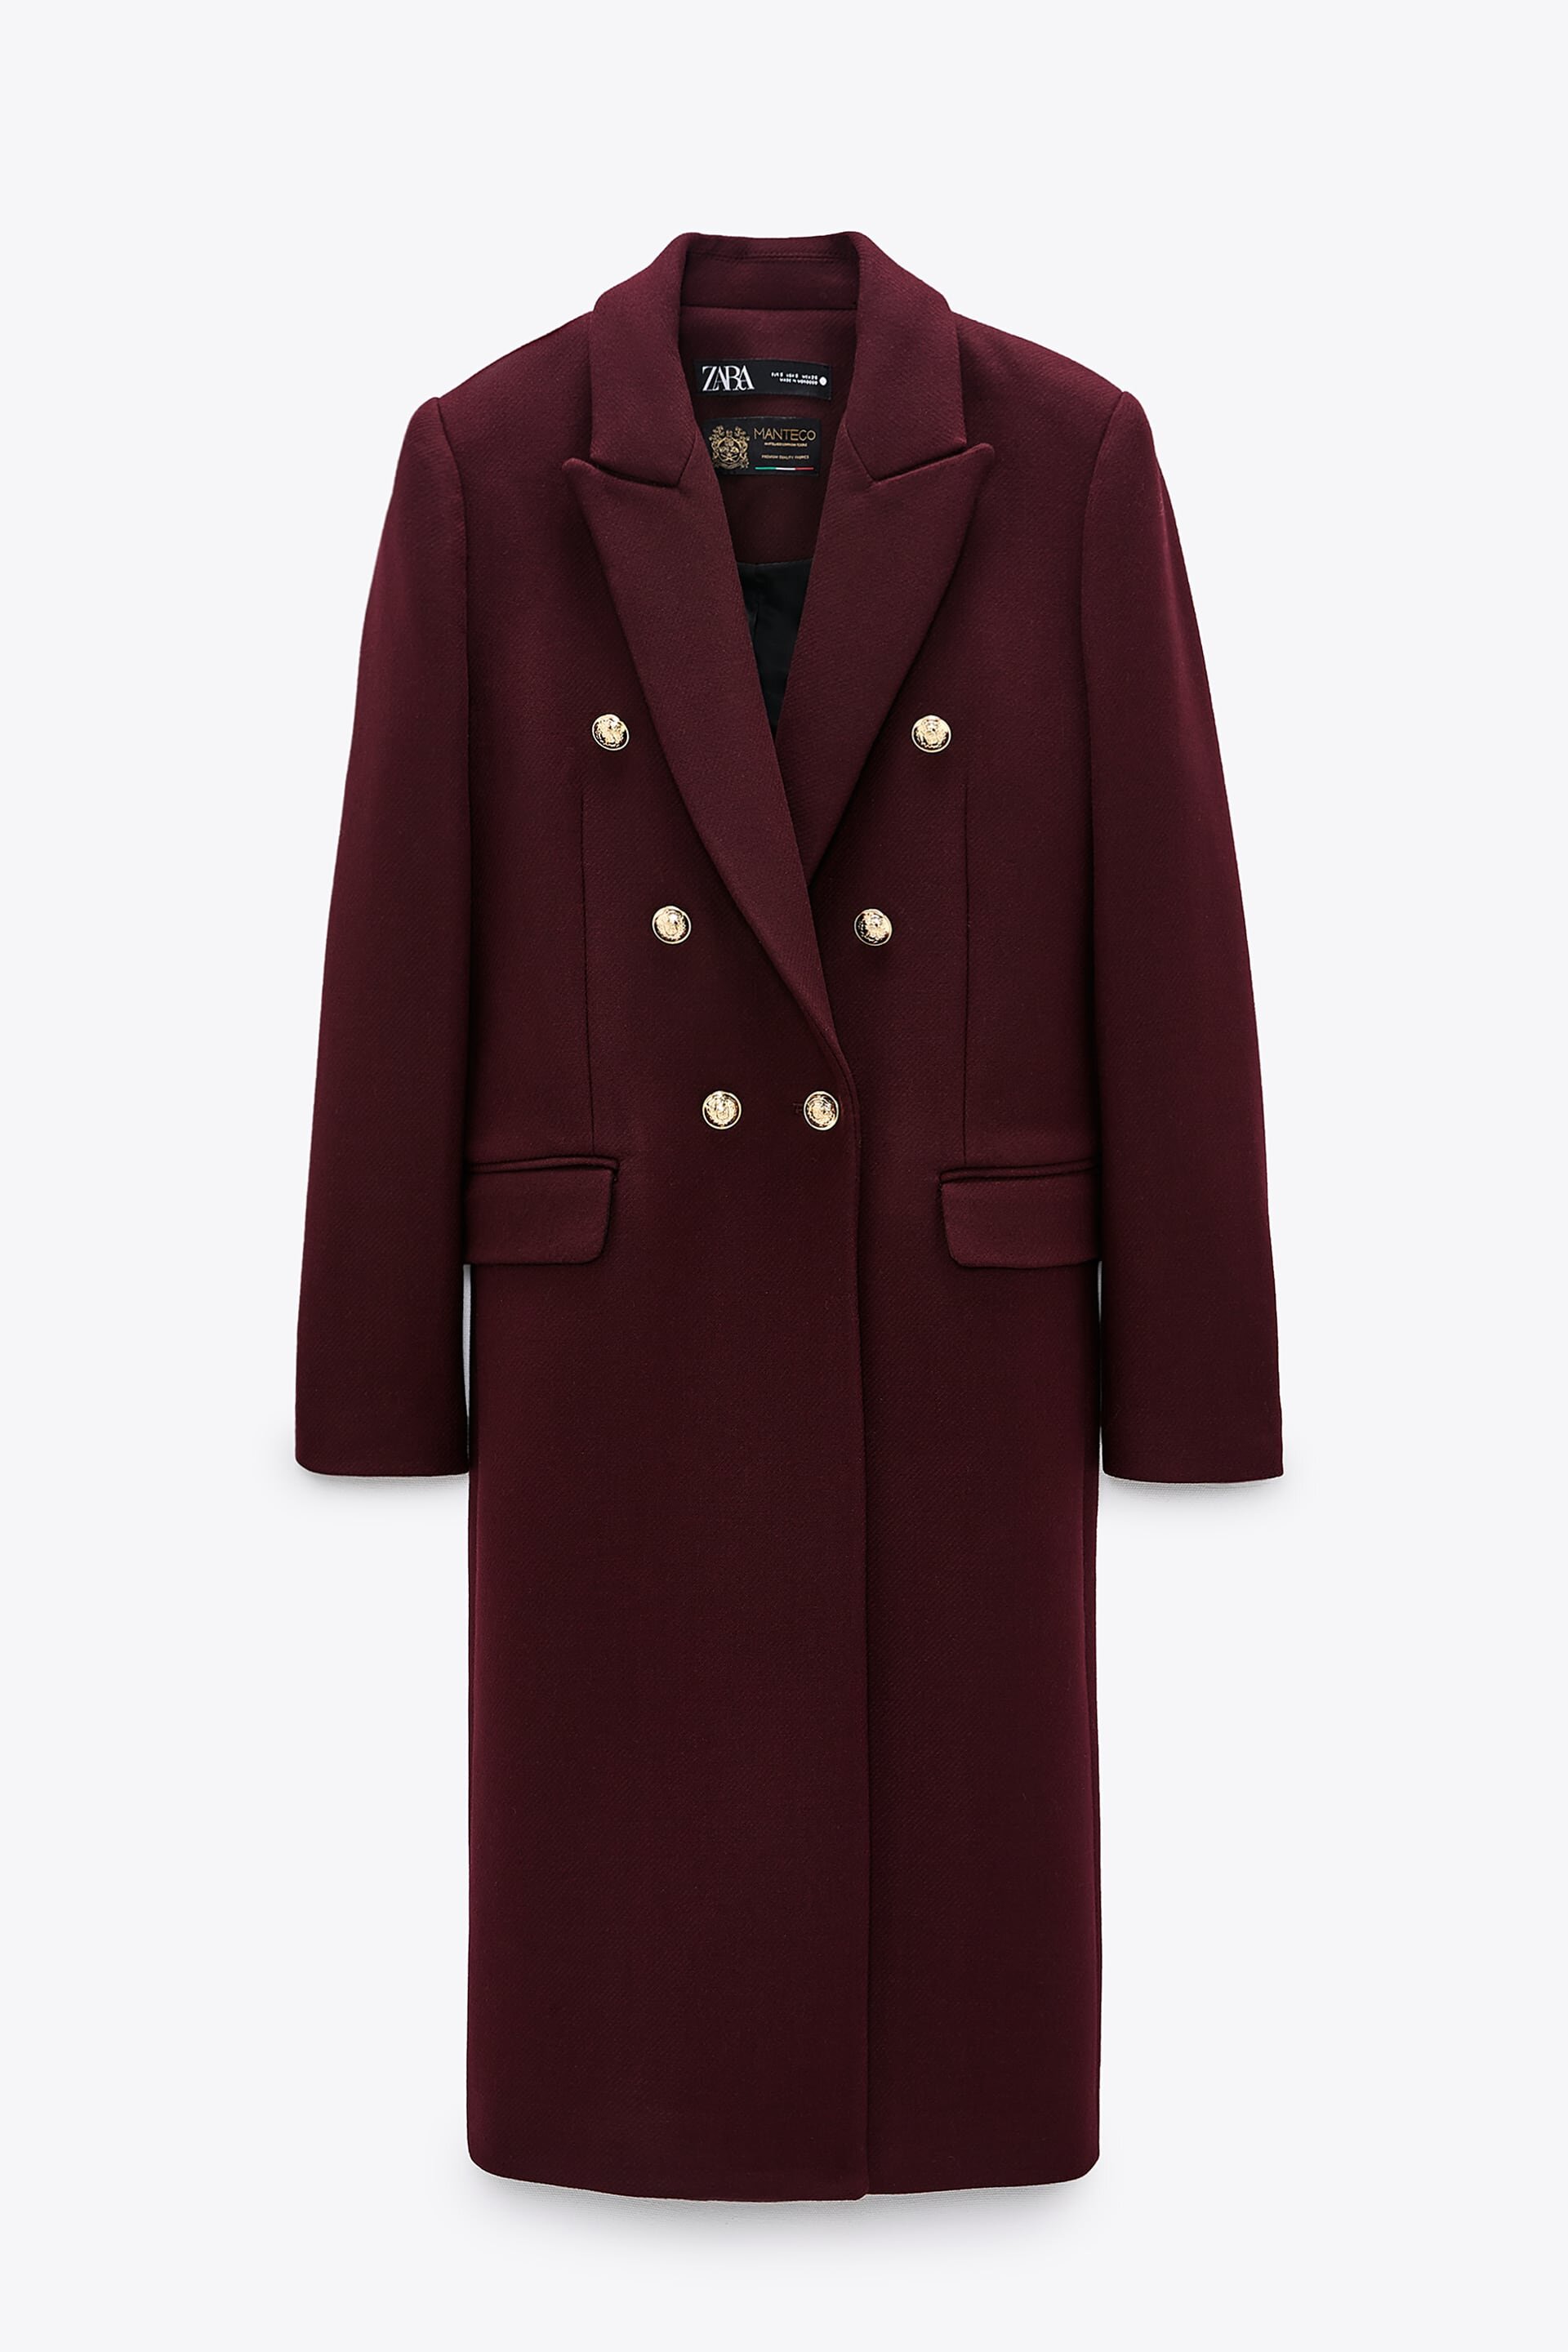 Zara Double Breasted Wool Blend Coat in Maroon — UFO No More